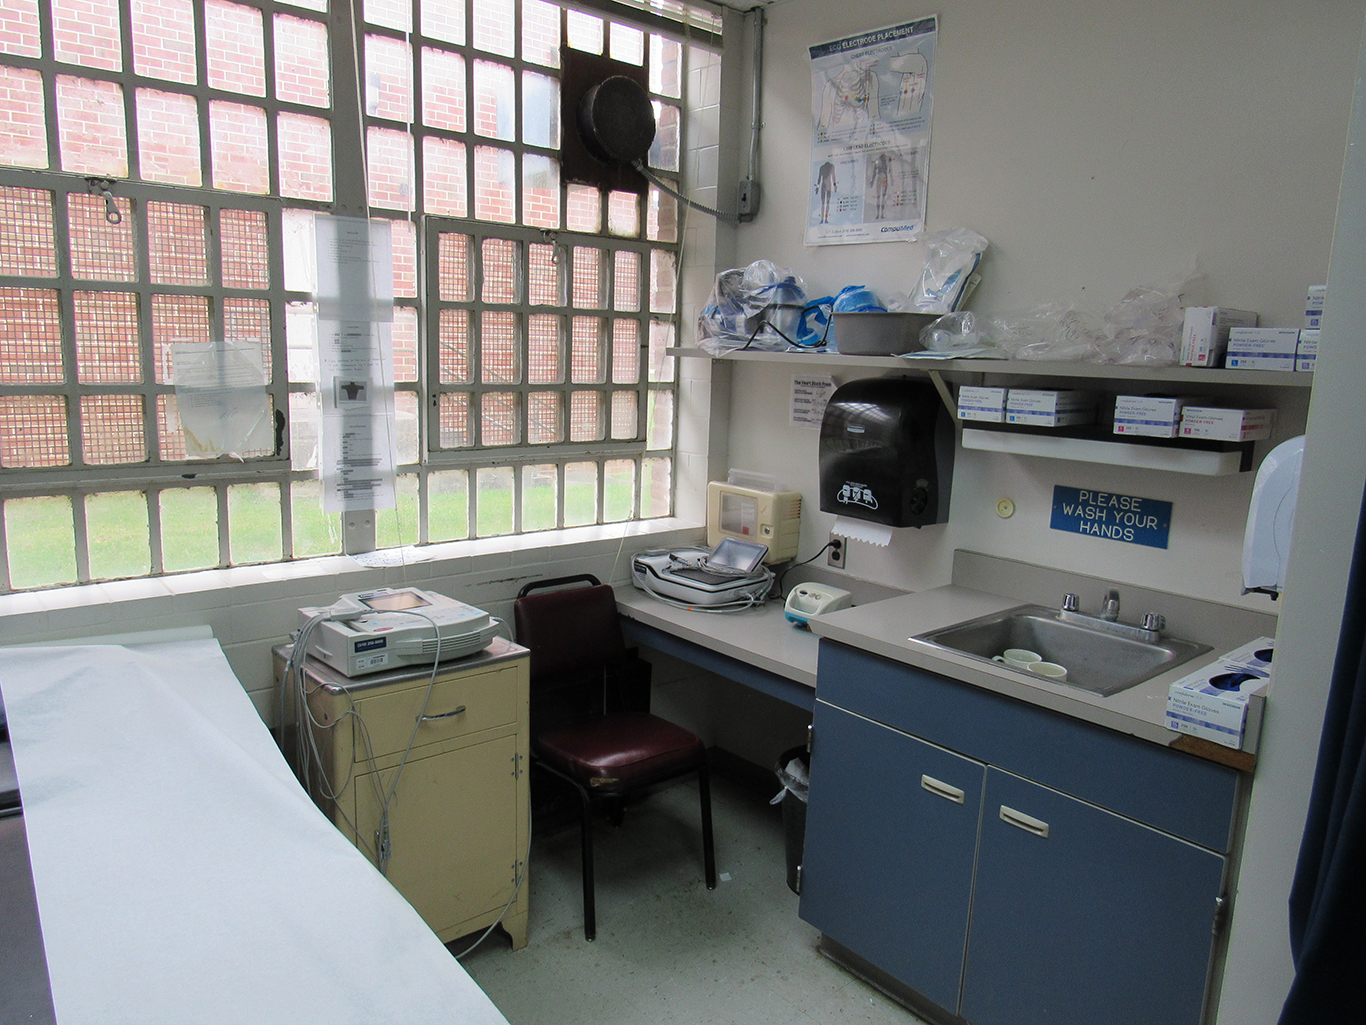 A medical examination room